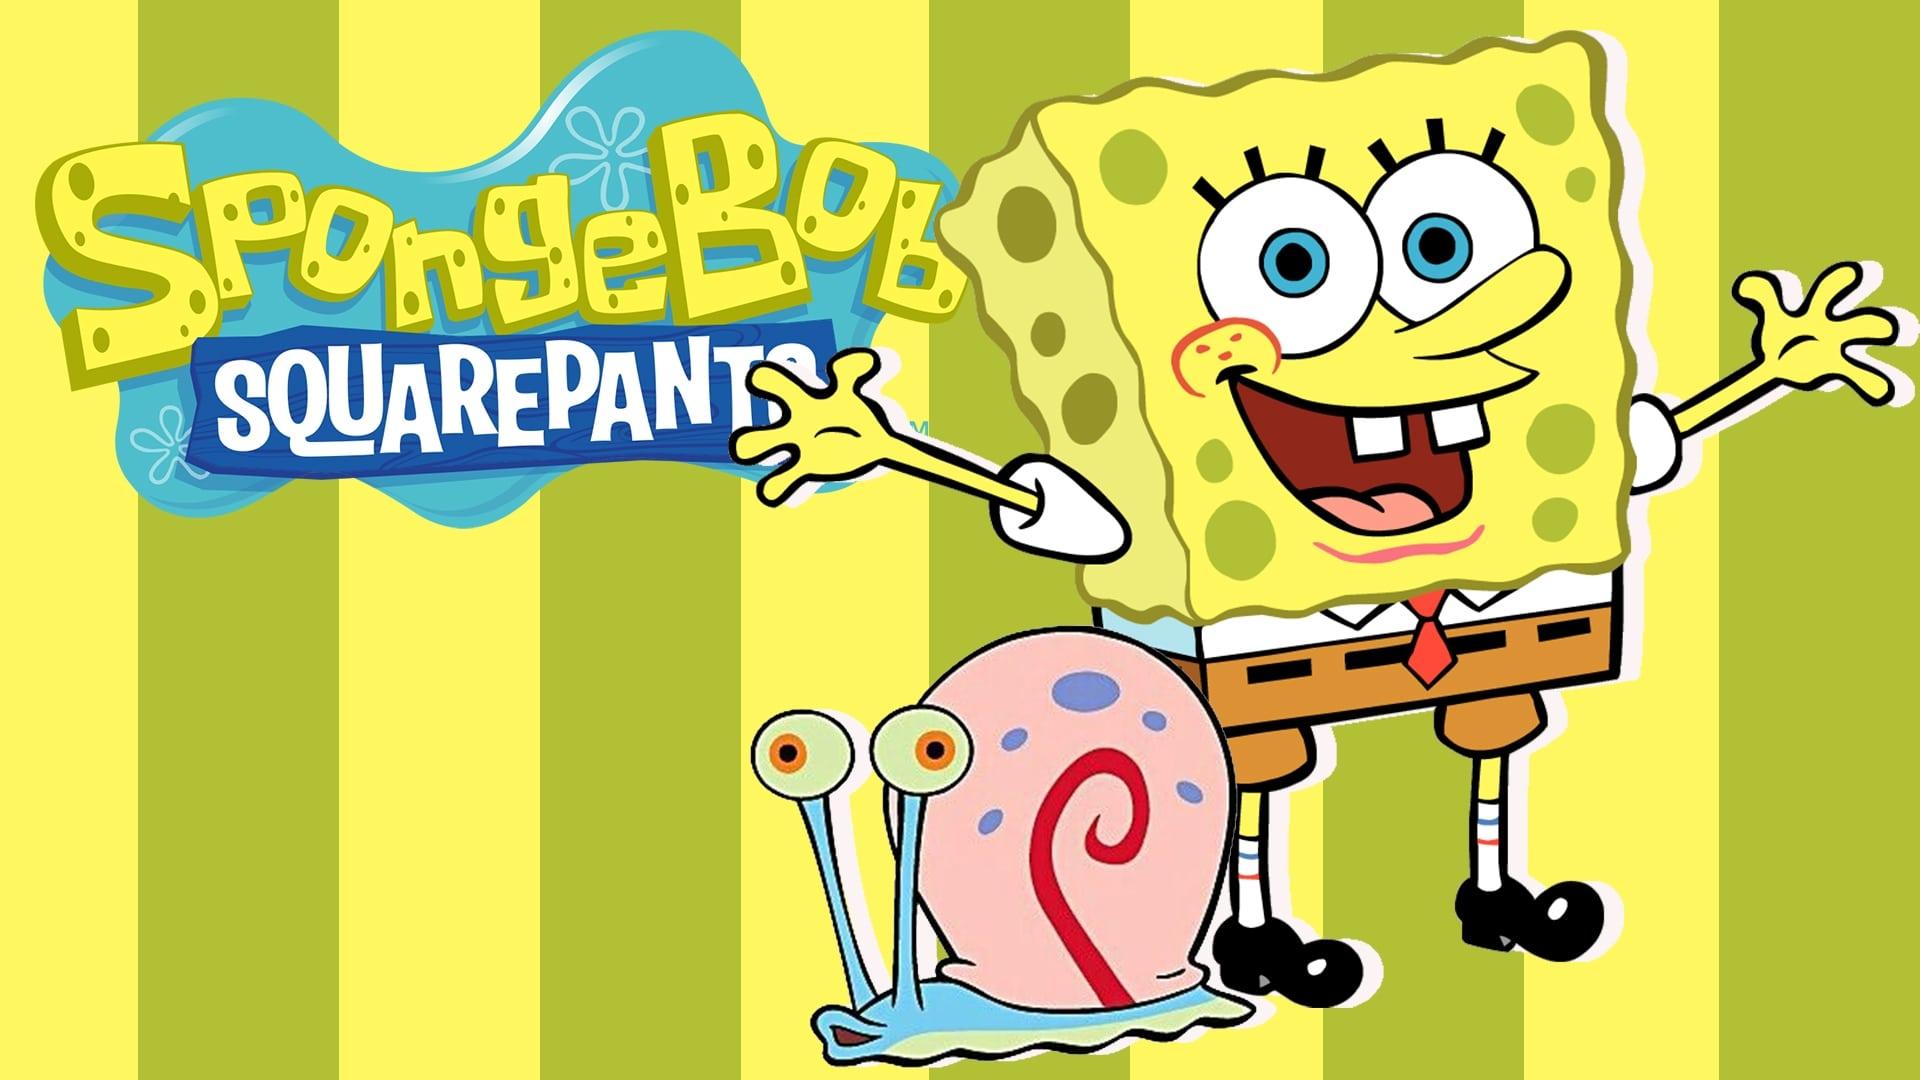 SpongeBob SquarePants: Where's Gary? backdrop